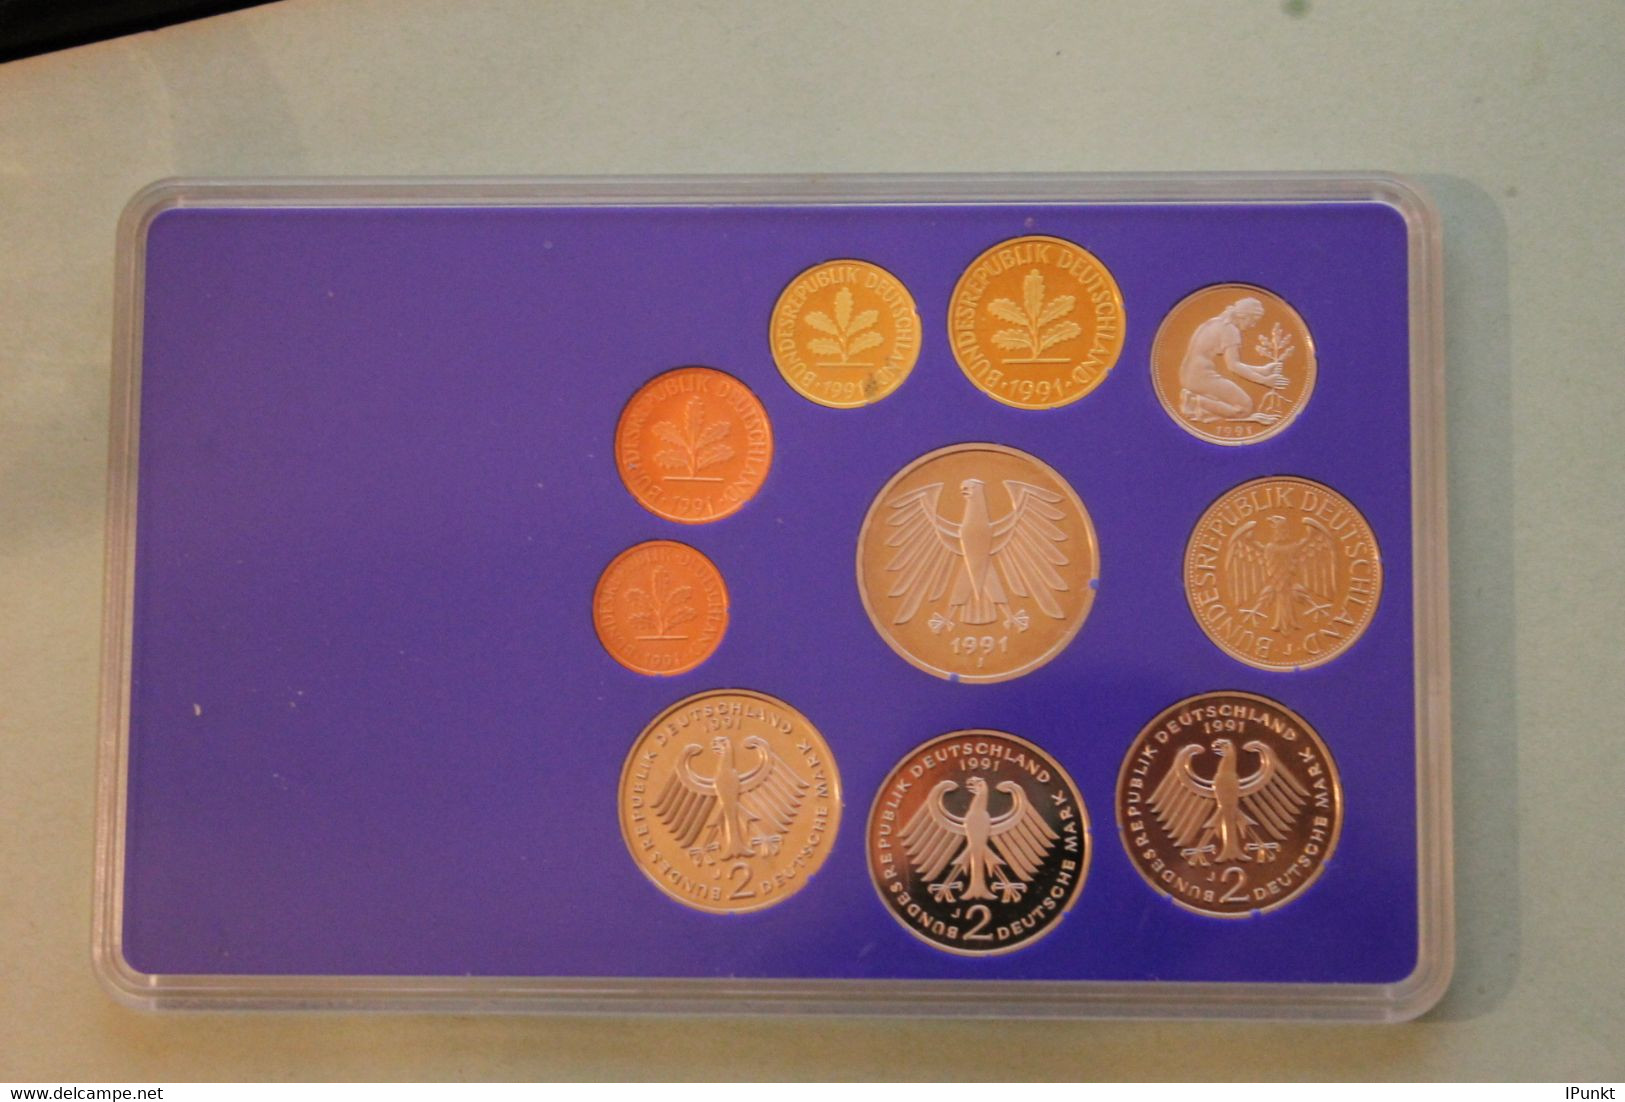 Deutschland, Kursmünzensatz Spiegelglanz (PP), 1991, J - Mint Sets & Proof Sets